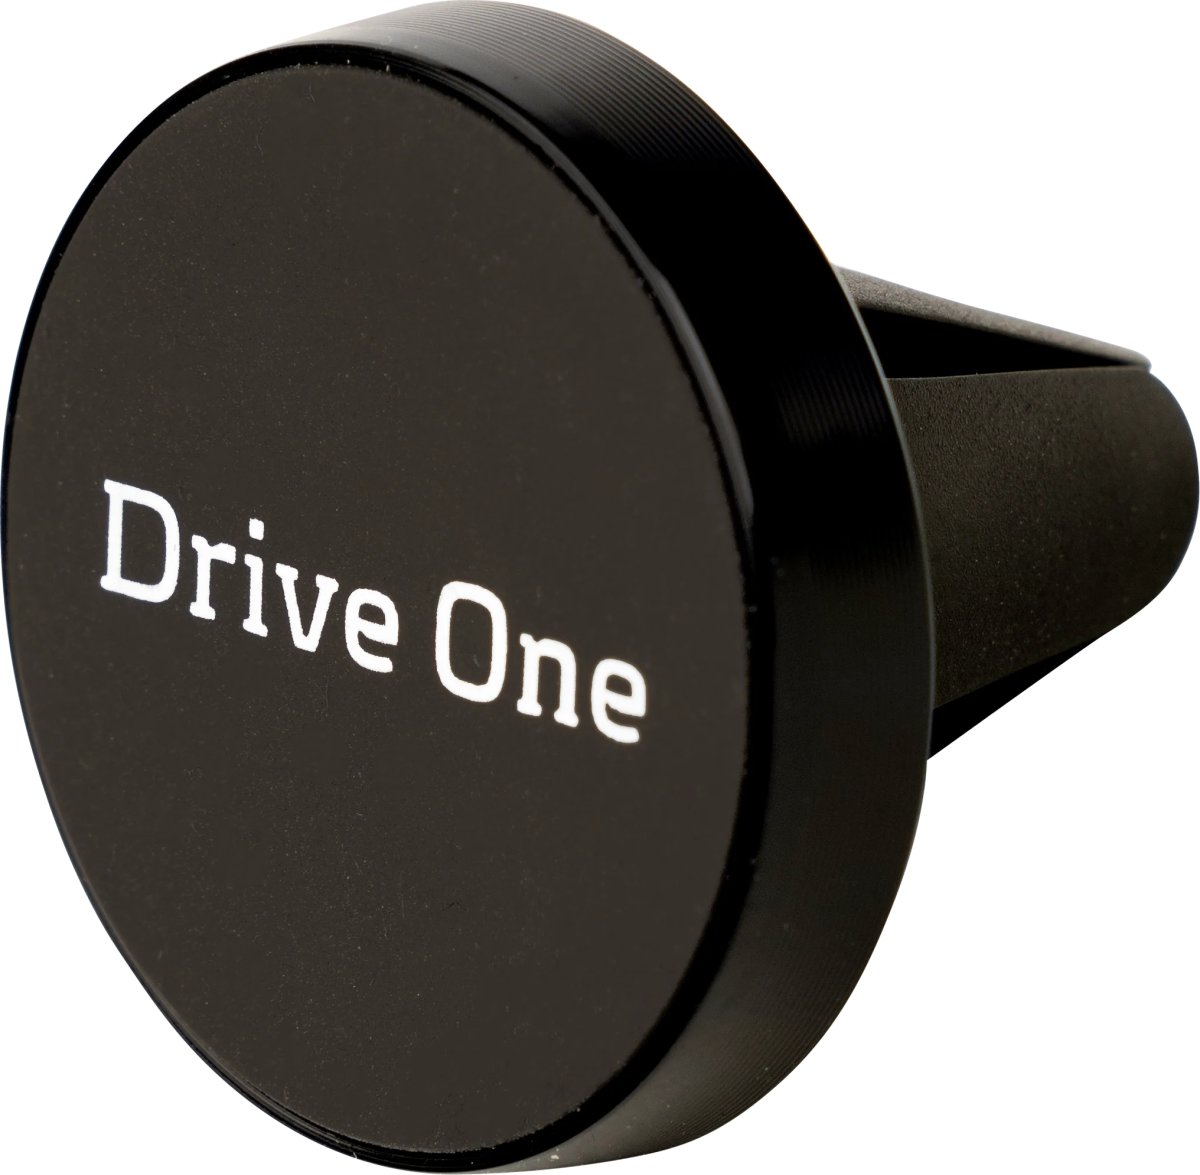 Drive One magnet holder